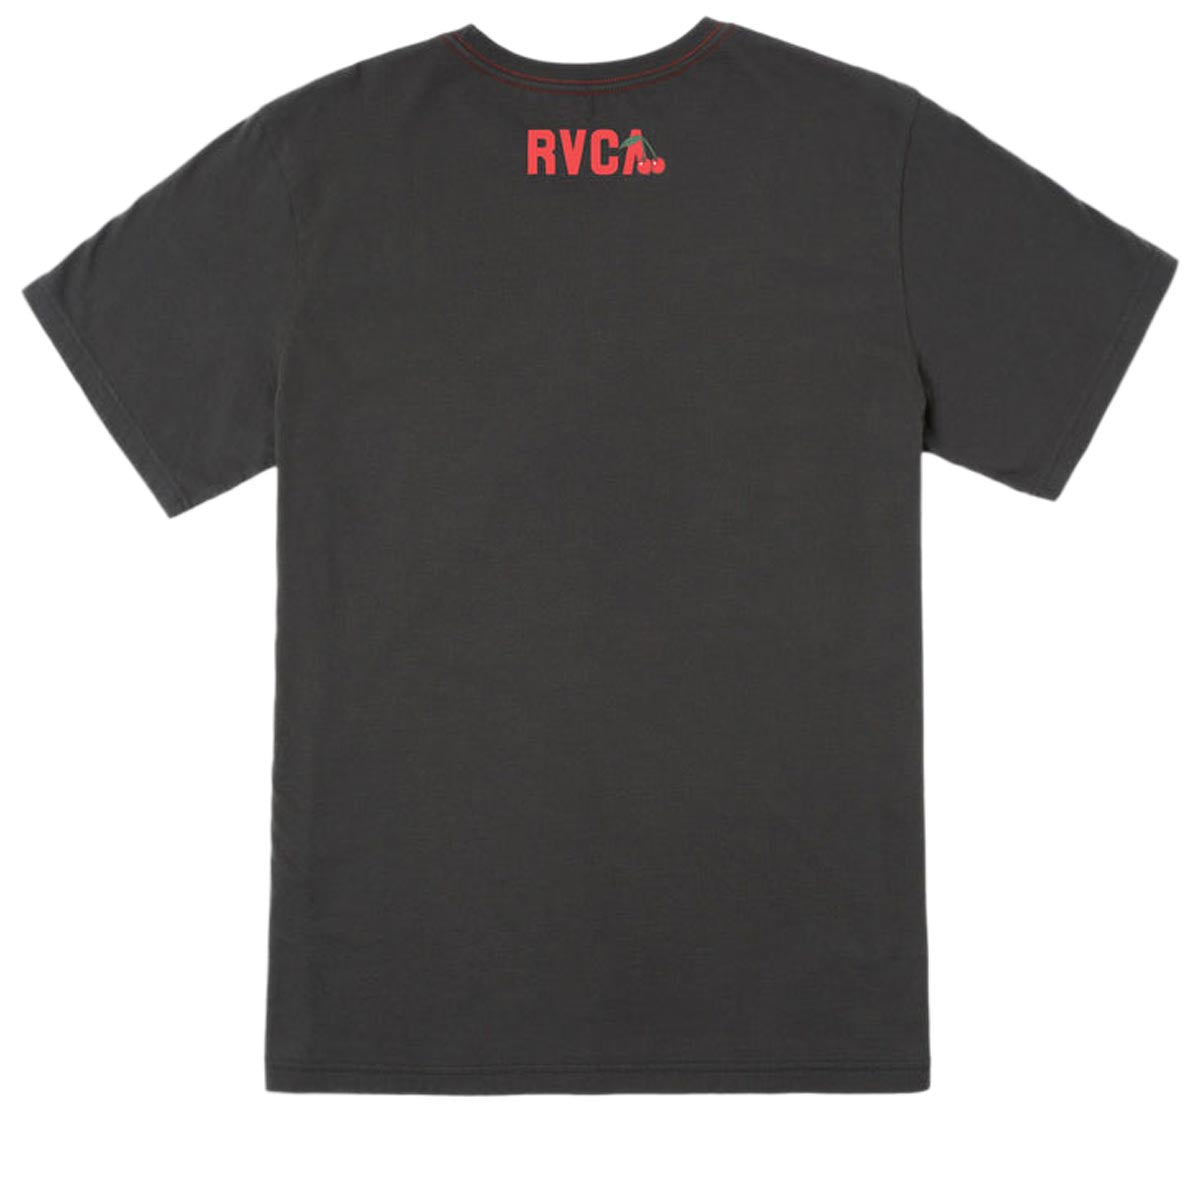 RVCA Luke Still Life T-Shirt - Pirate Black image 2